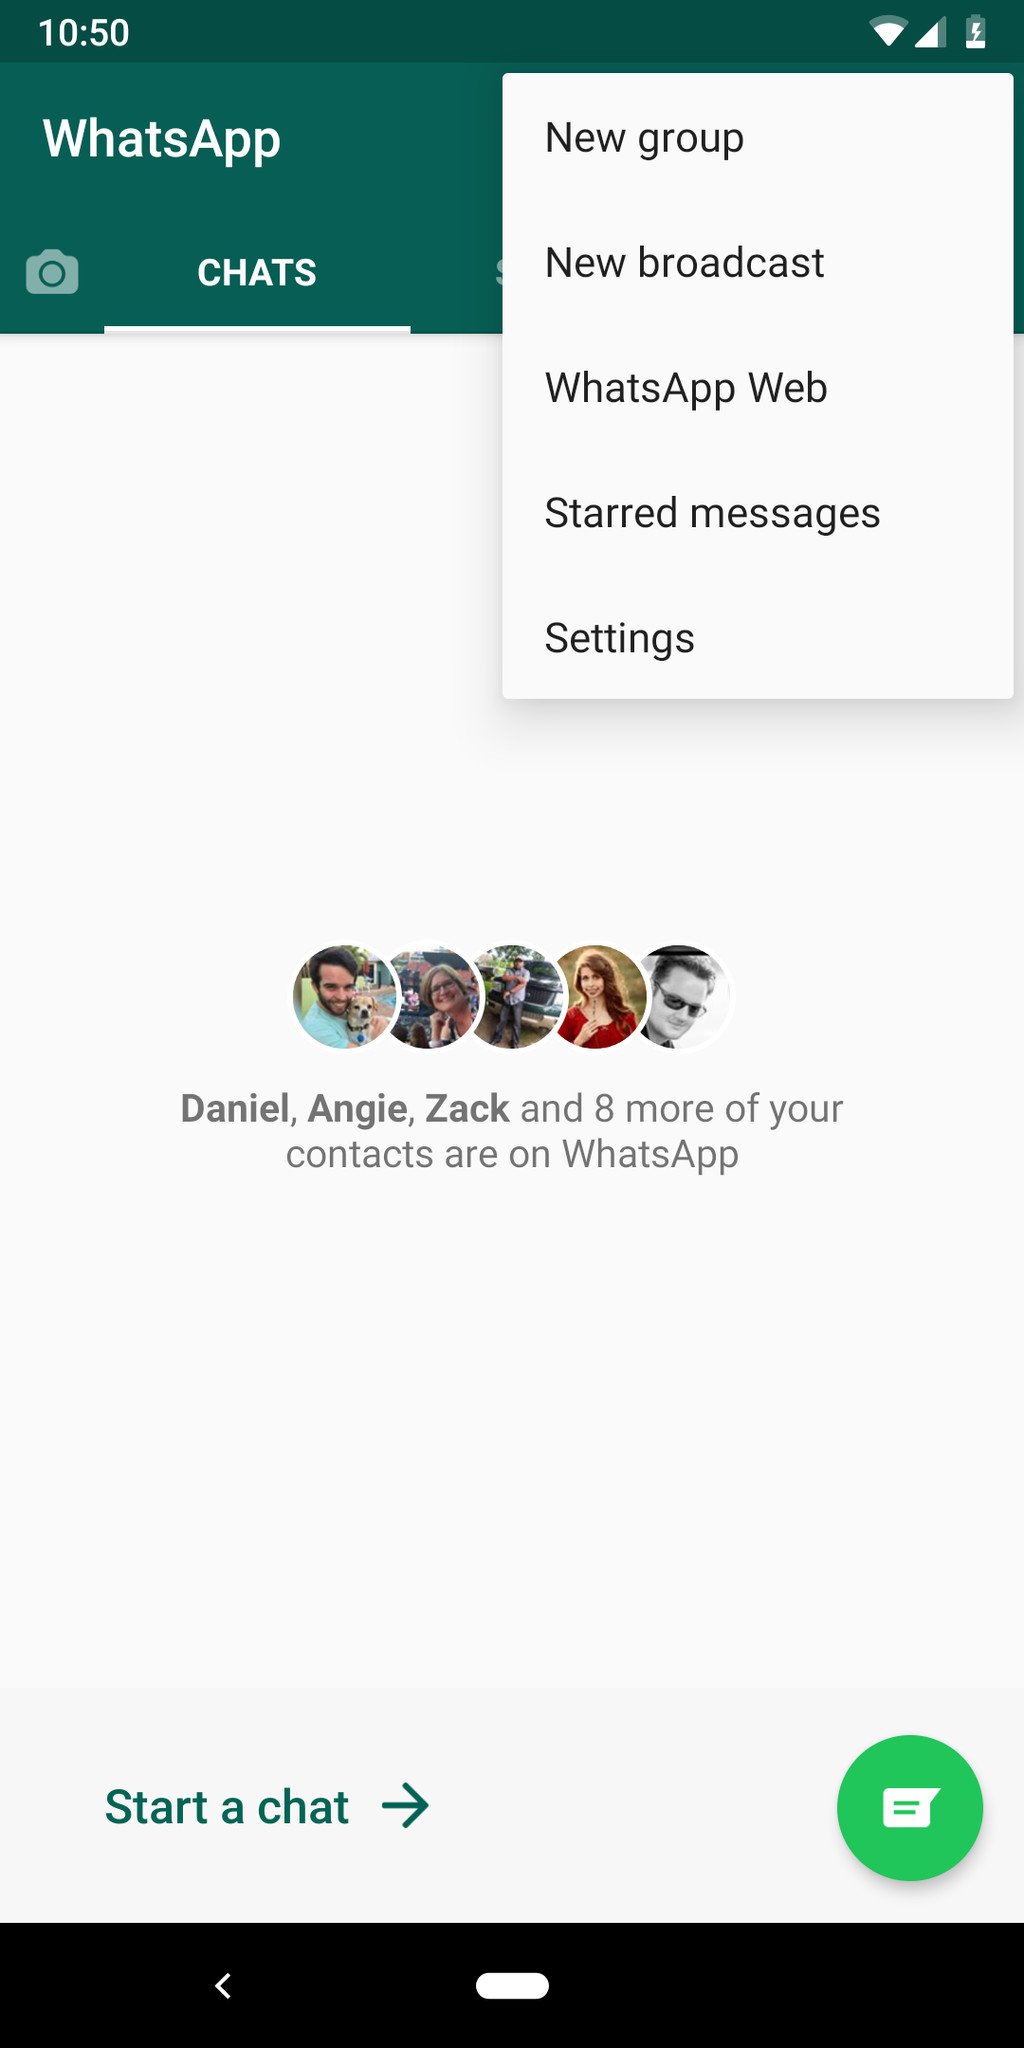 WhatsApp broadcast feature